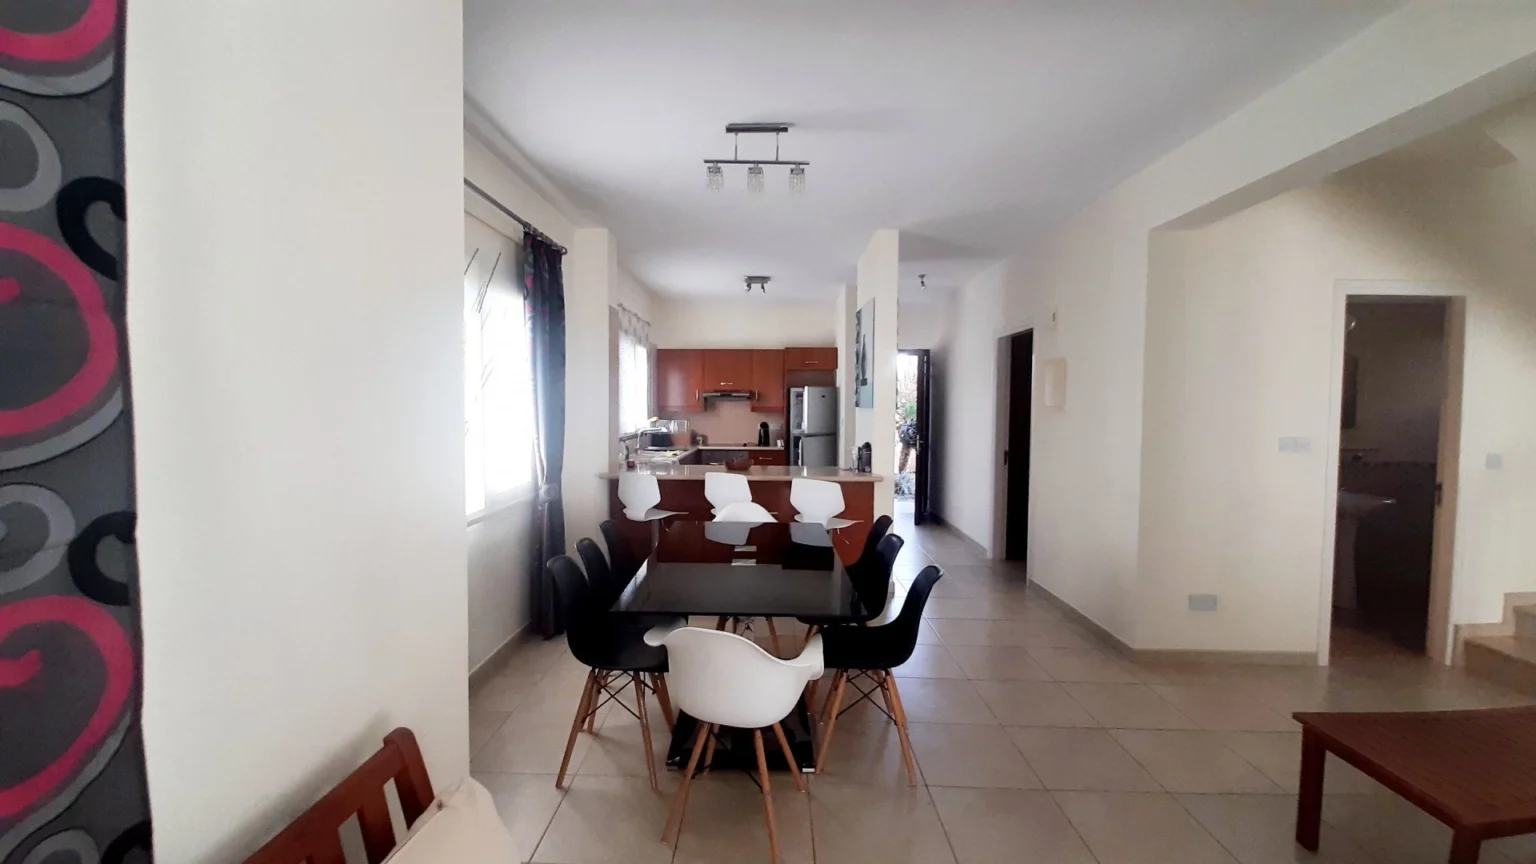 3 Bedroom House for Rent in Secret Valley, Paphos District